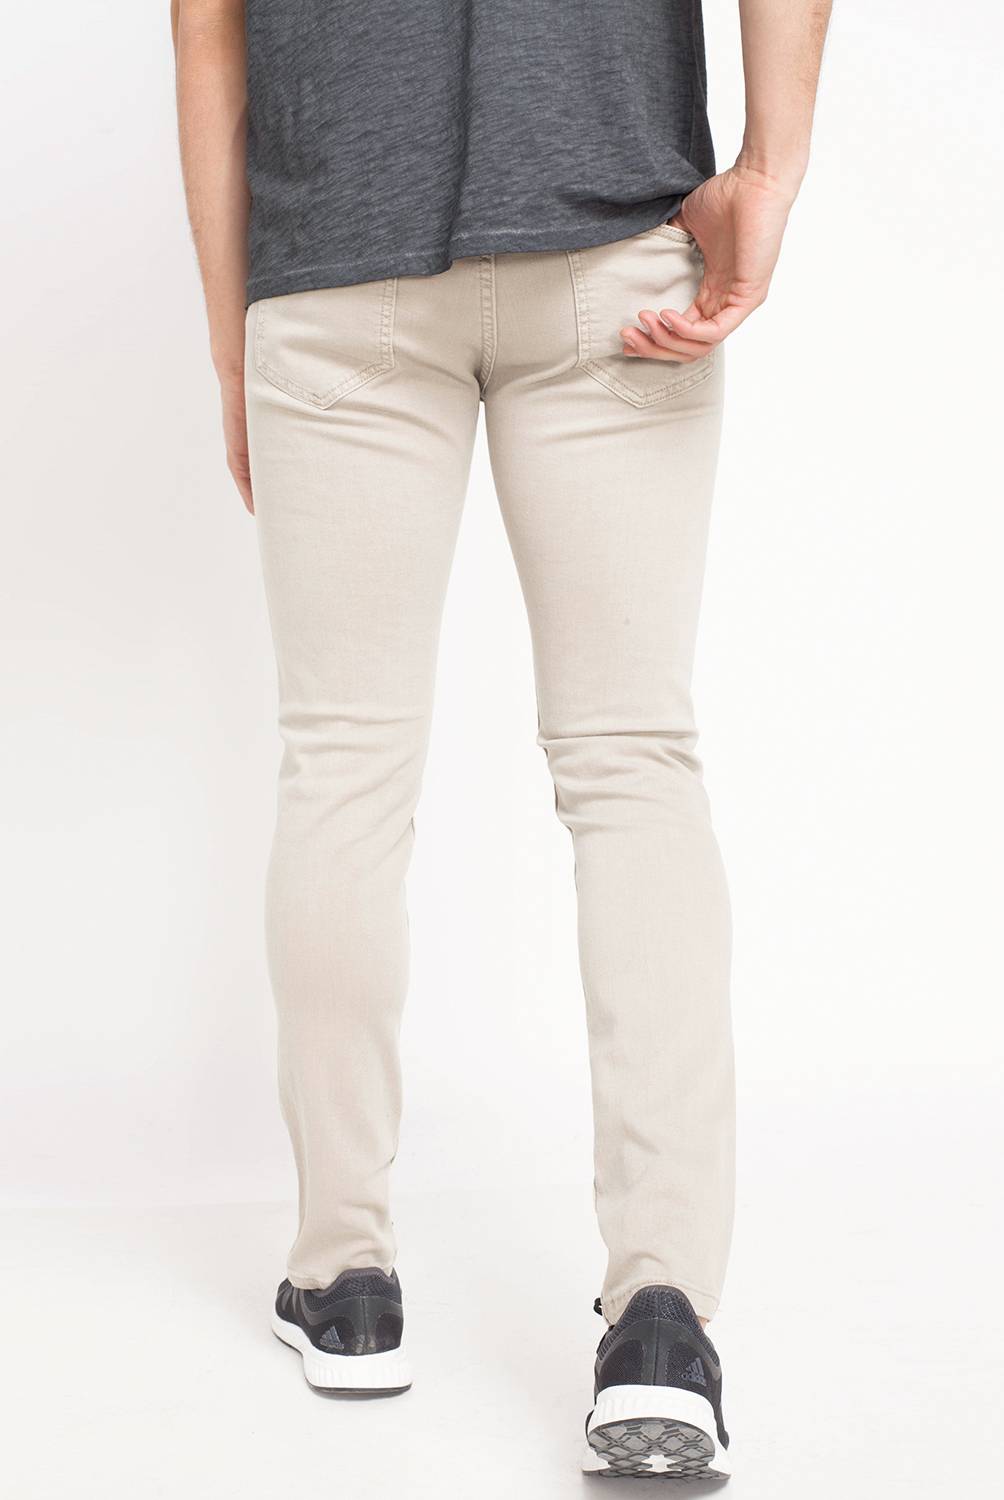 MOSSIMO - Jeans 5 Bolsillos Súper Skinny